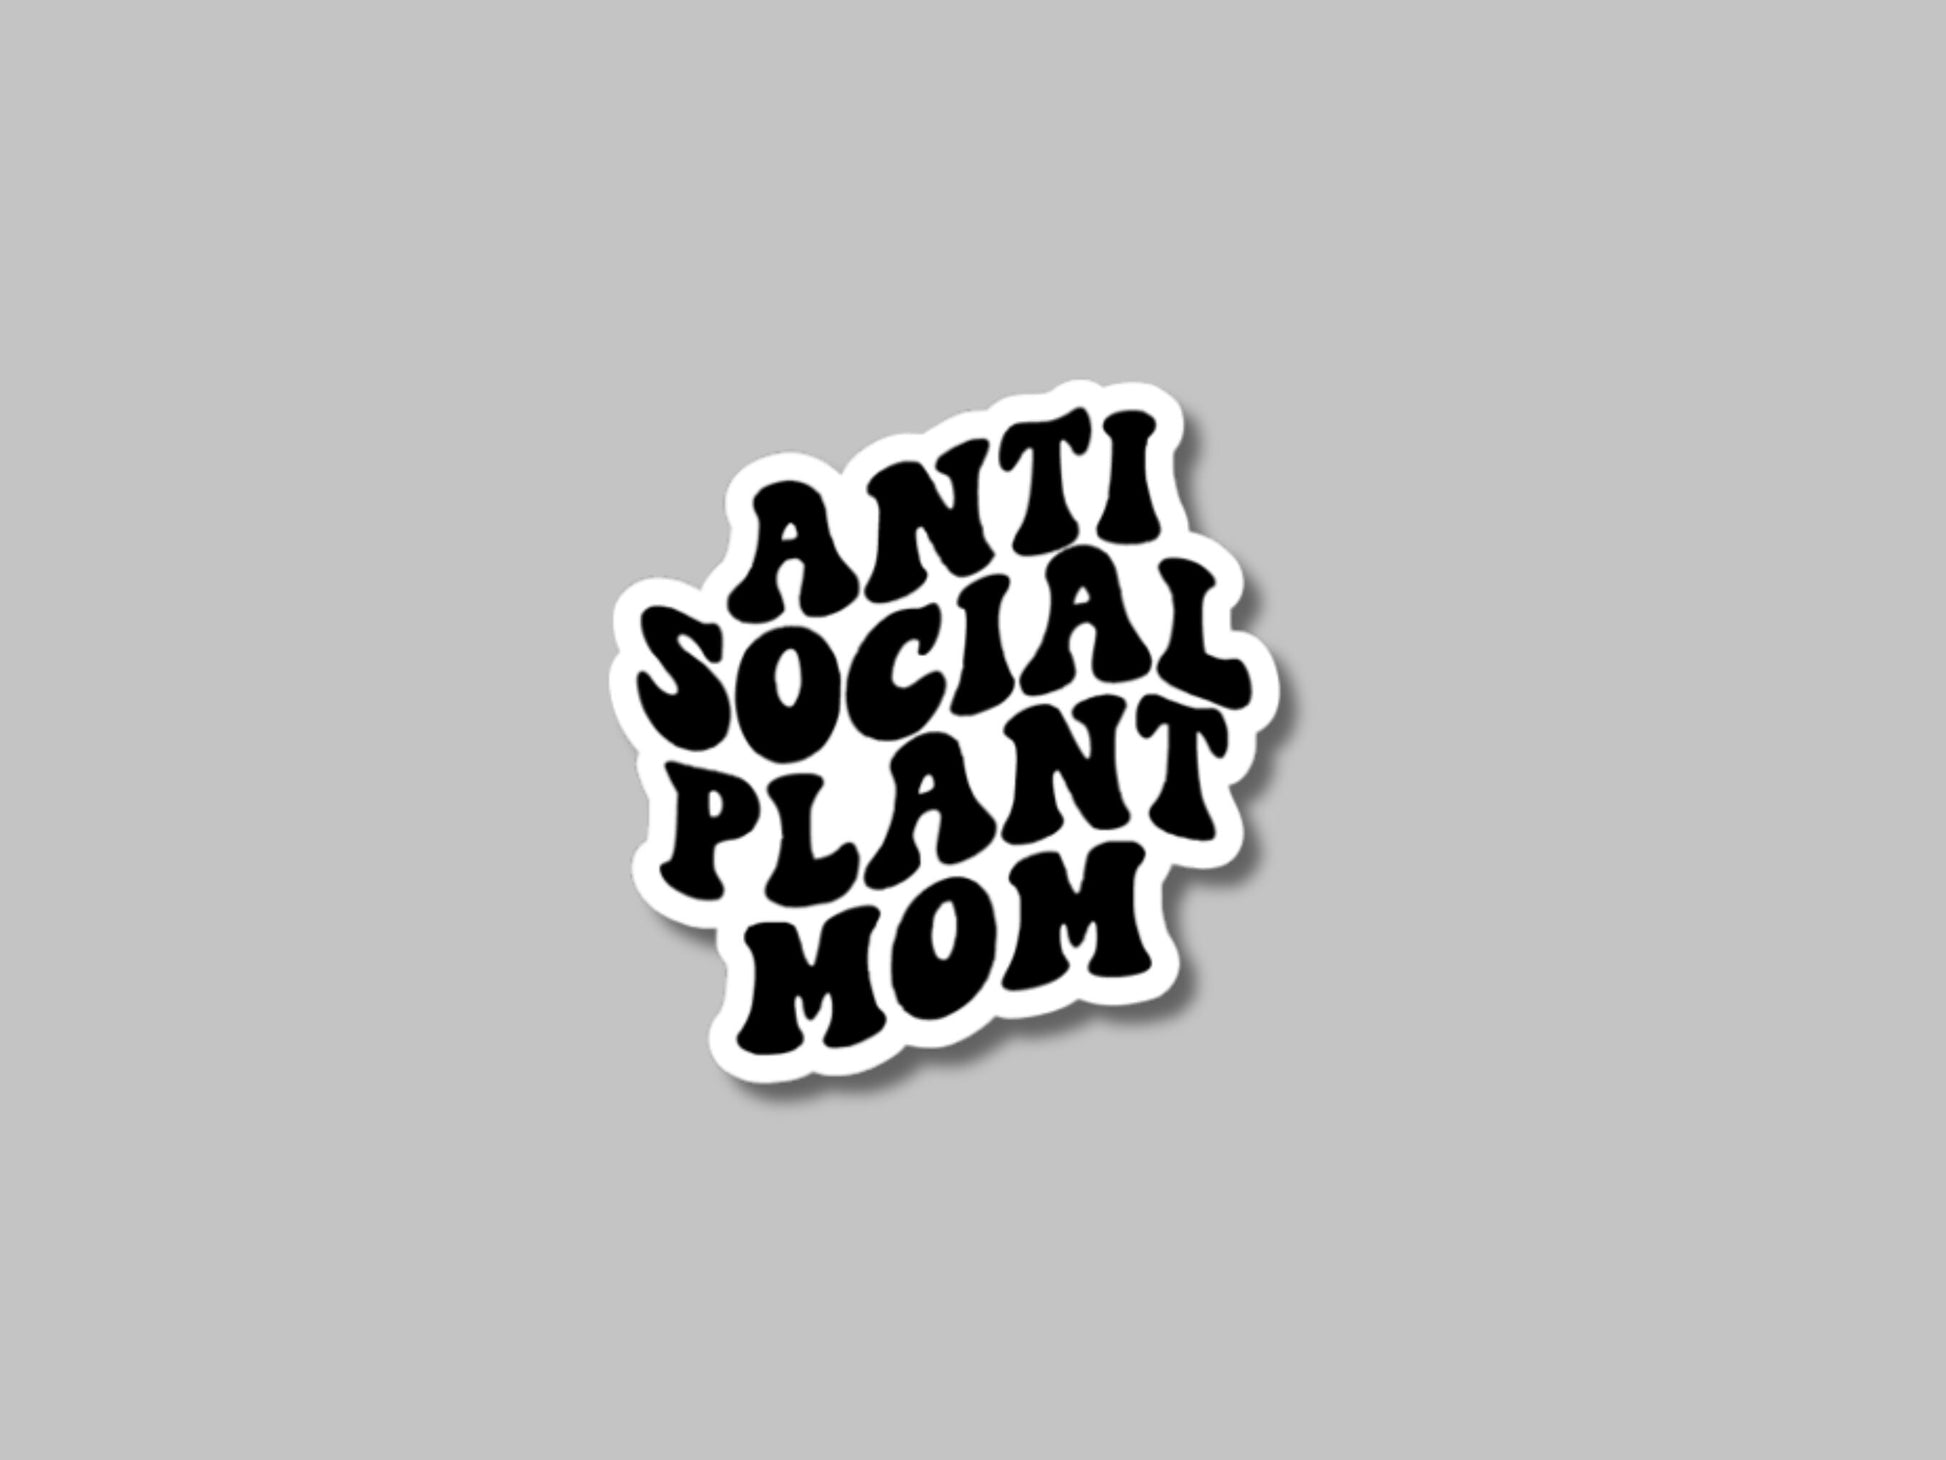 antisocial plant mom, plants sticker, plant gifts, plant stickers, gifts for plant lover, for laptop, for water bottle, antisocial moms club